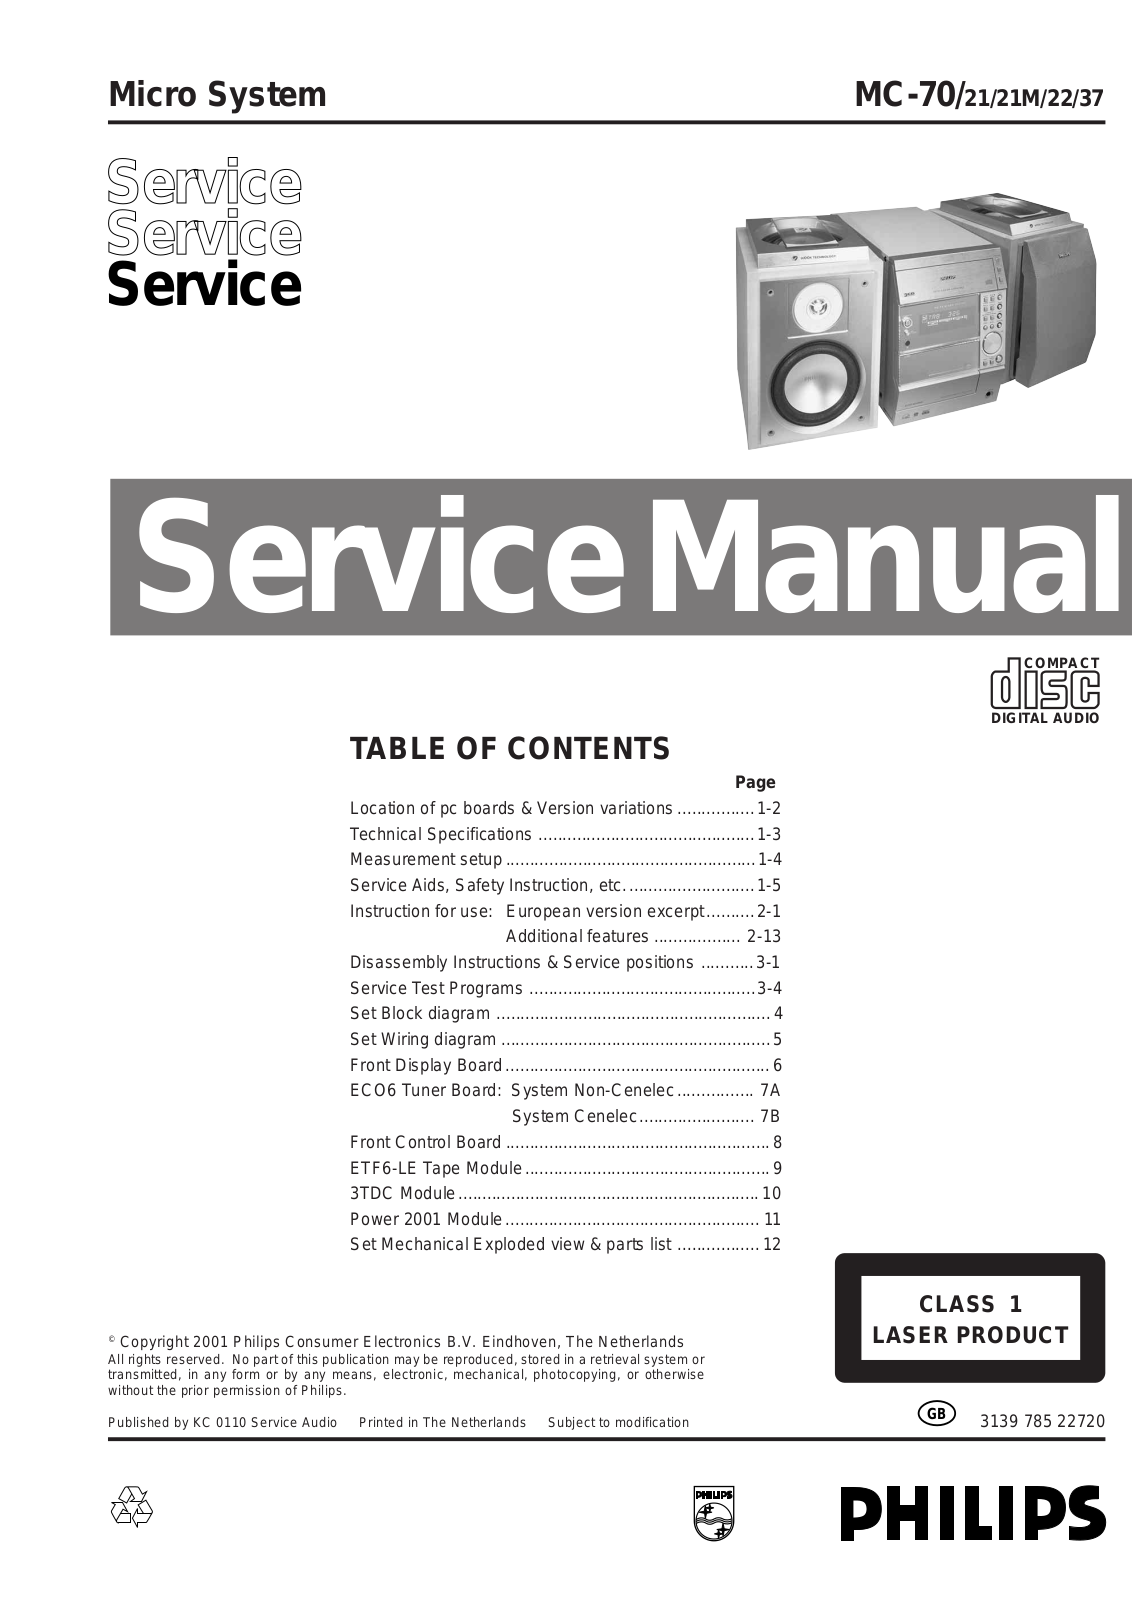 Philips MC-70-21, MMC-70-22, MC-70-37 Service Manual